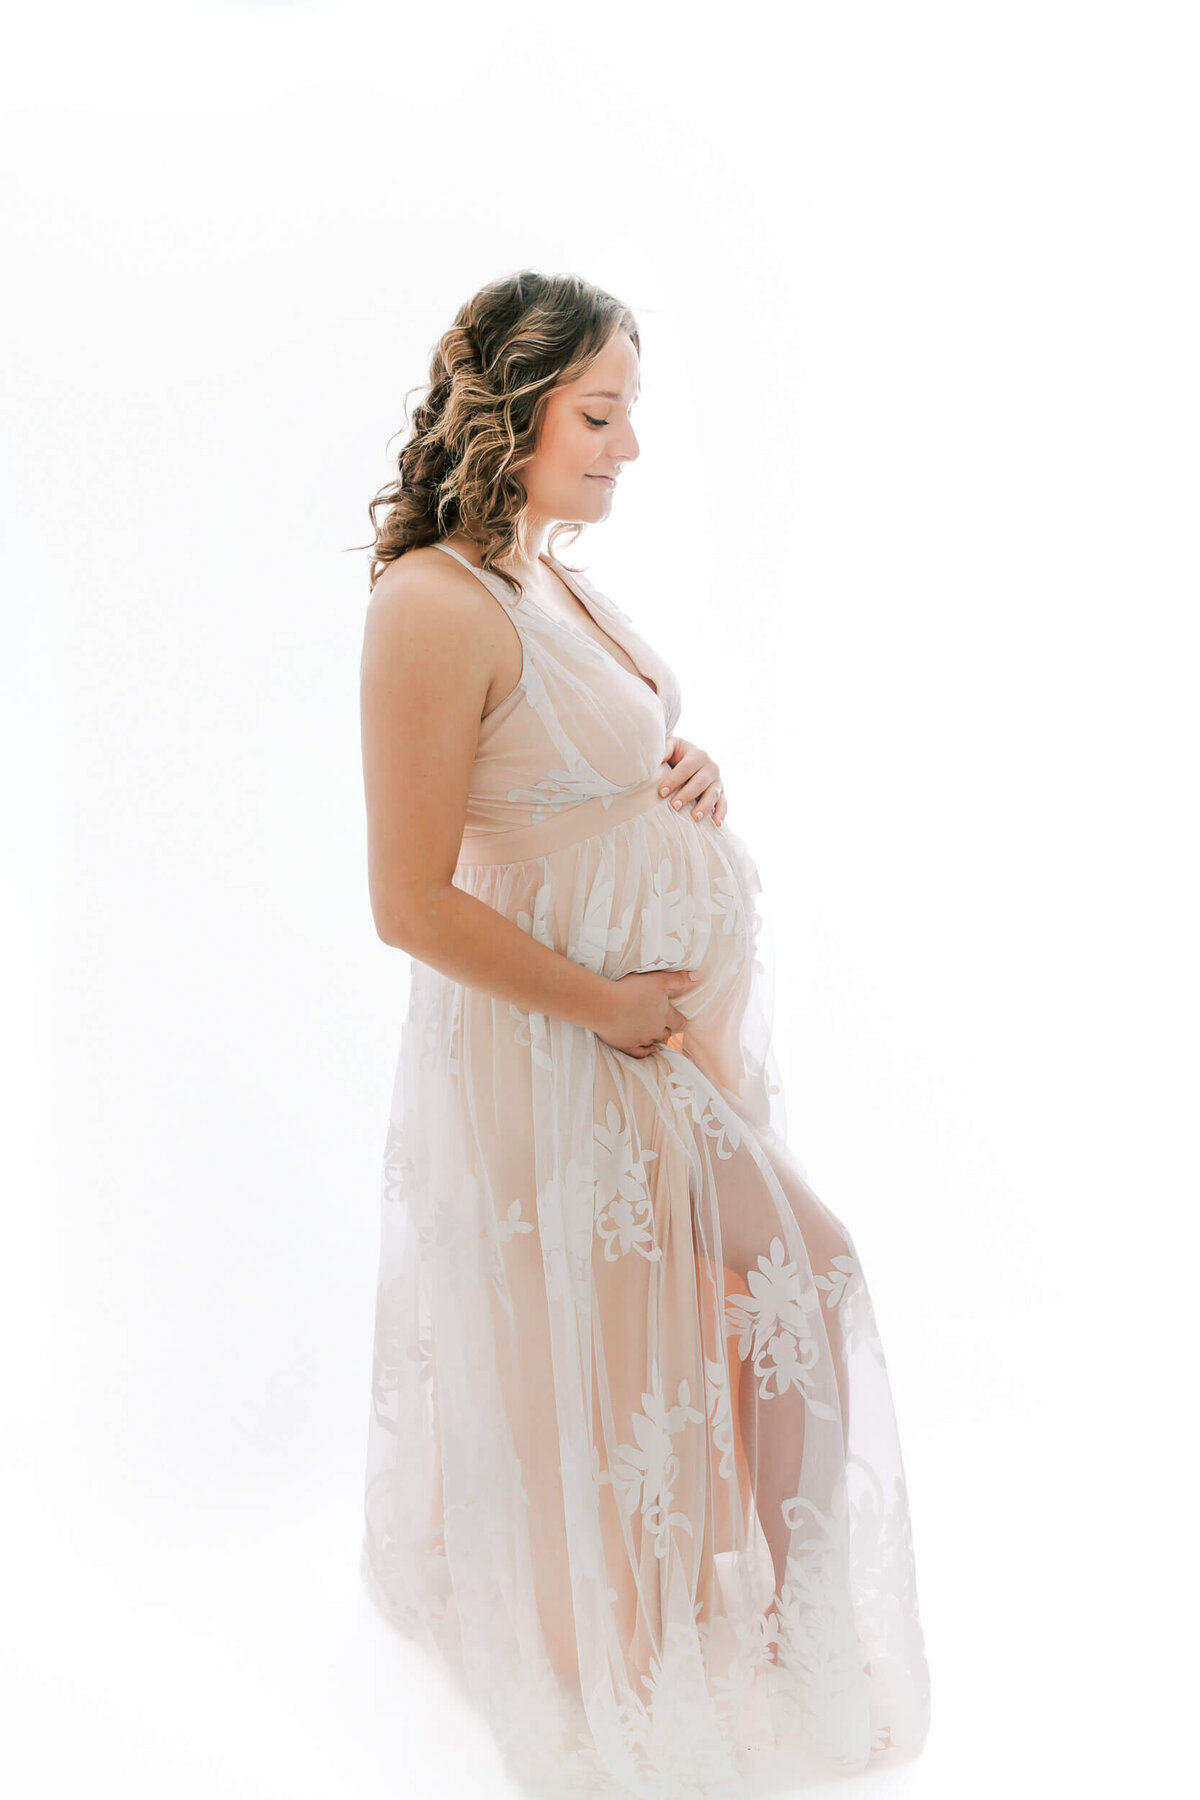 Guelph-Maternity-Photographer.jpg--6